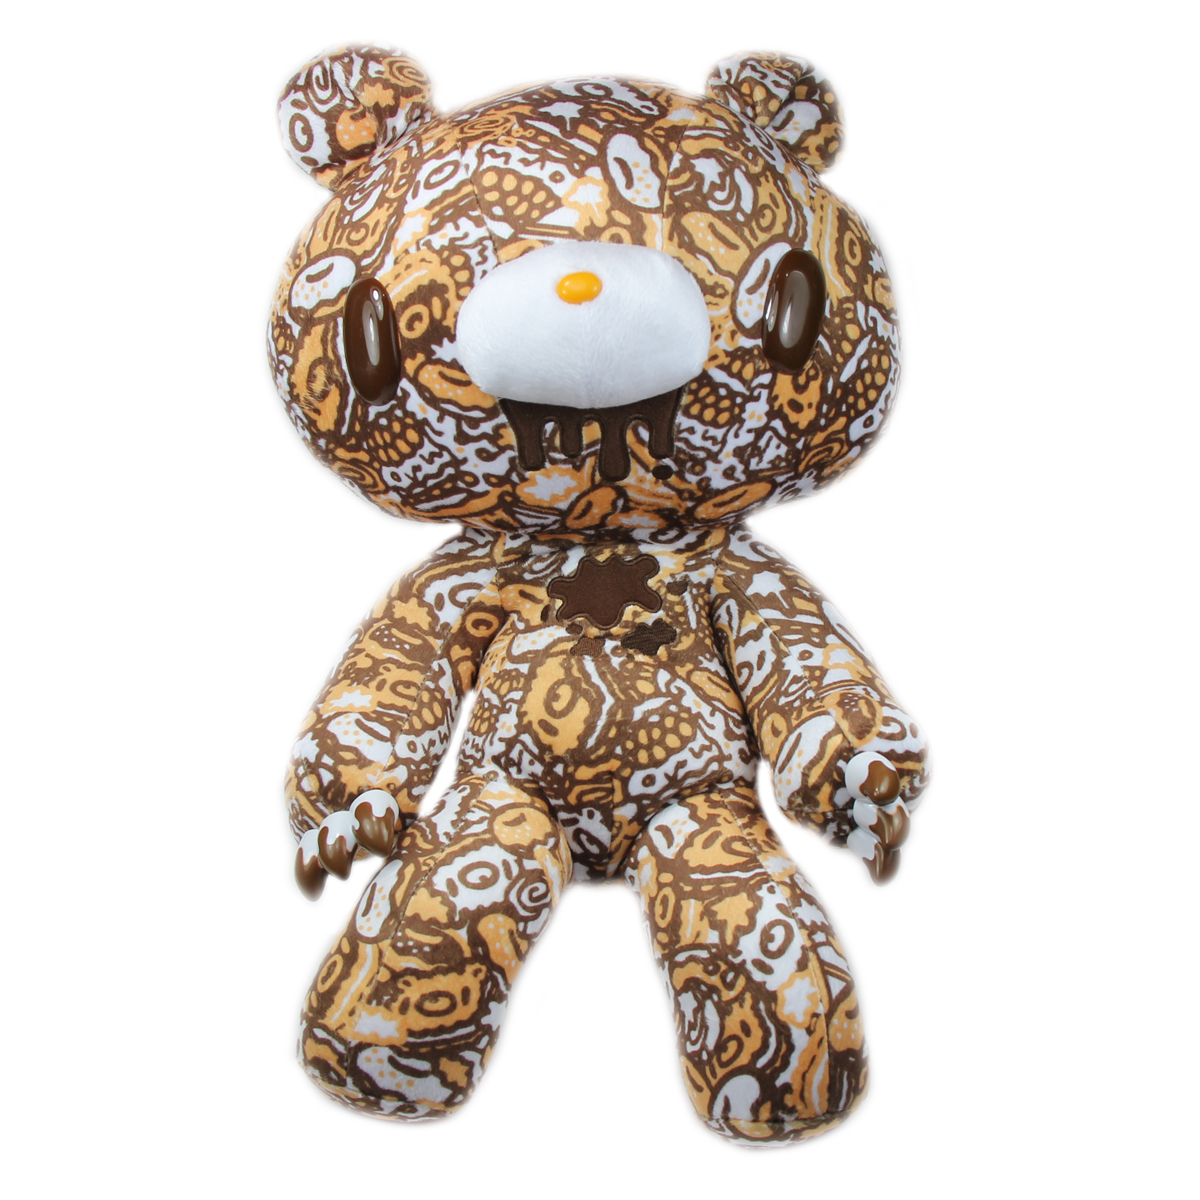 Taito Textillic Gloomy Bear Plush Doll Orange Brown GP #523 17 Inches